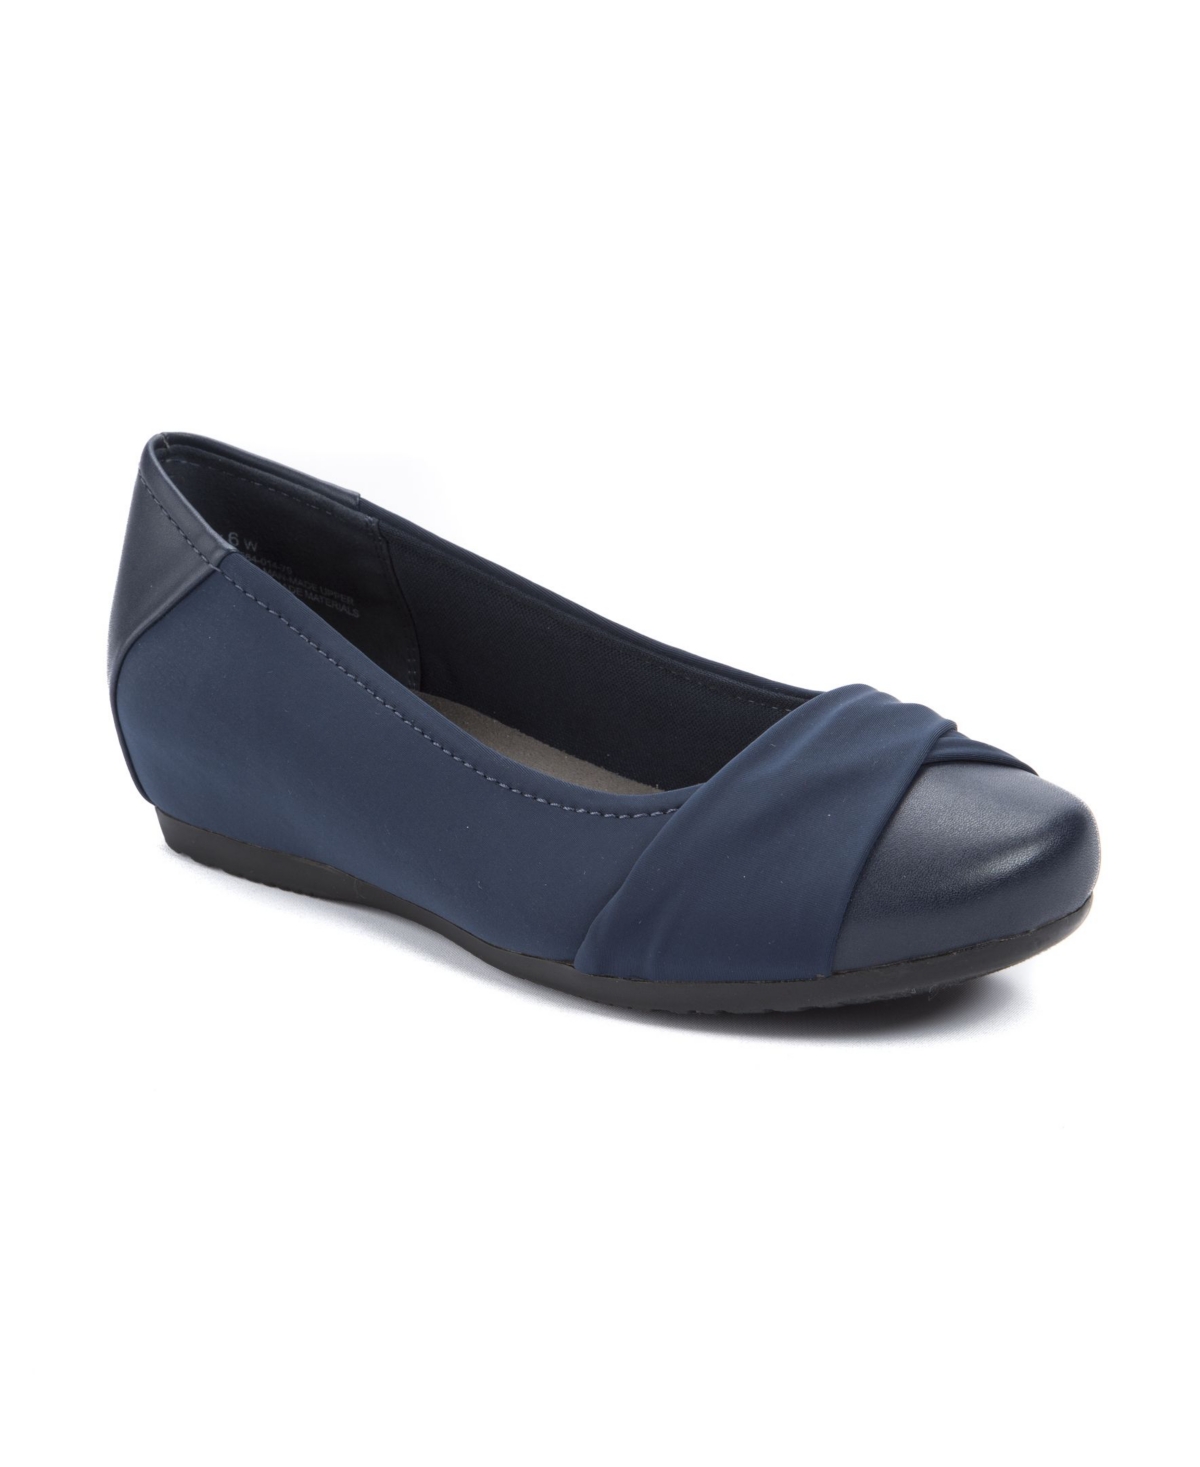 Baretraps Women's Mitsy Slip-On Flats Women's Shoes